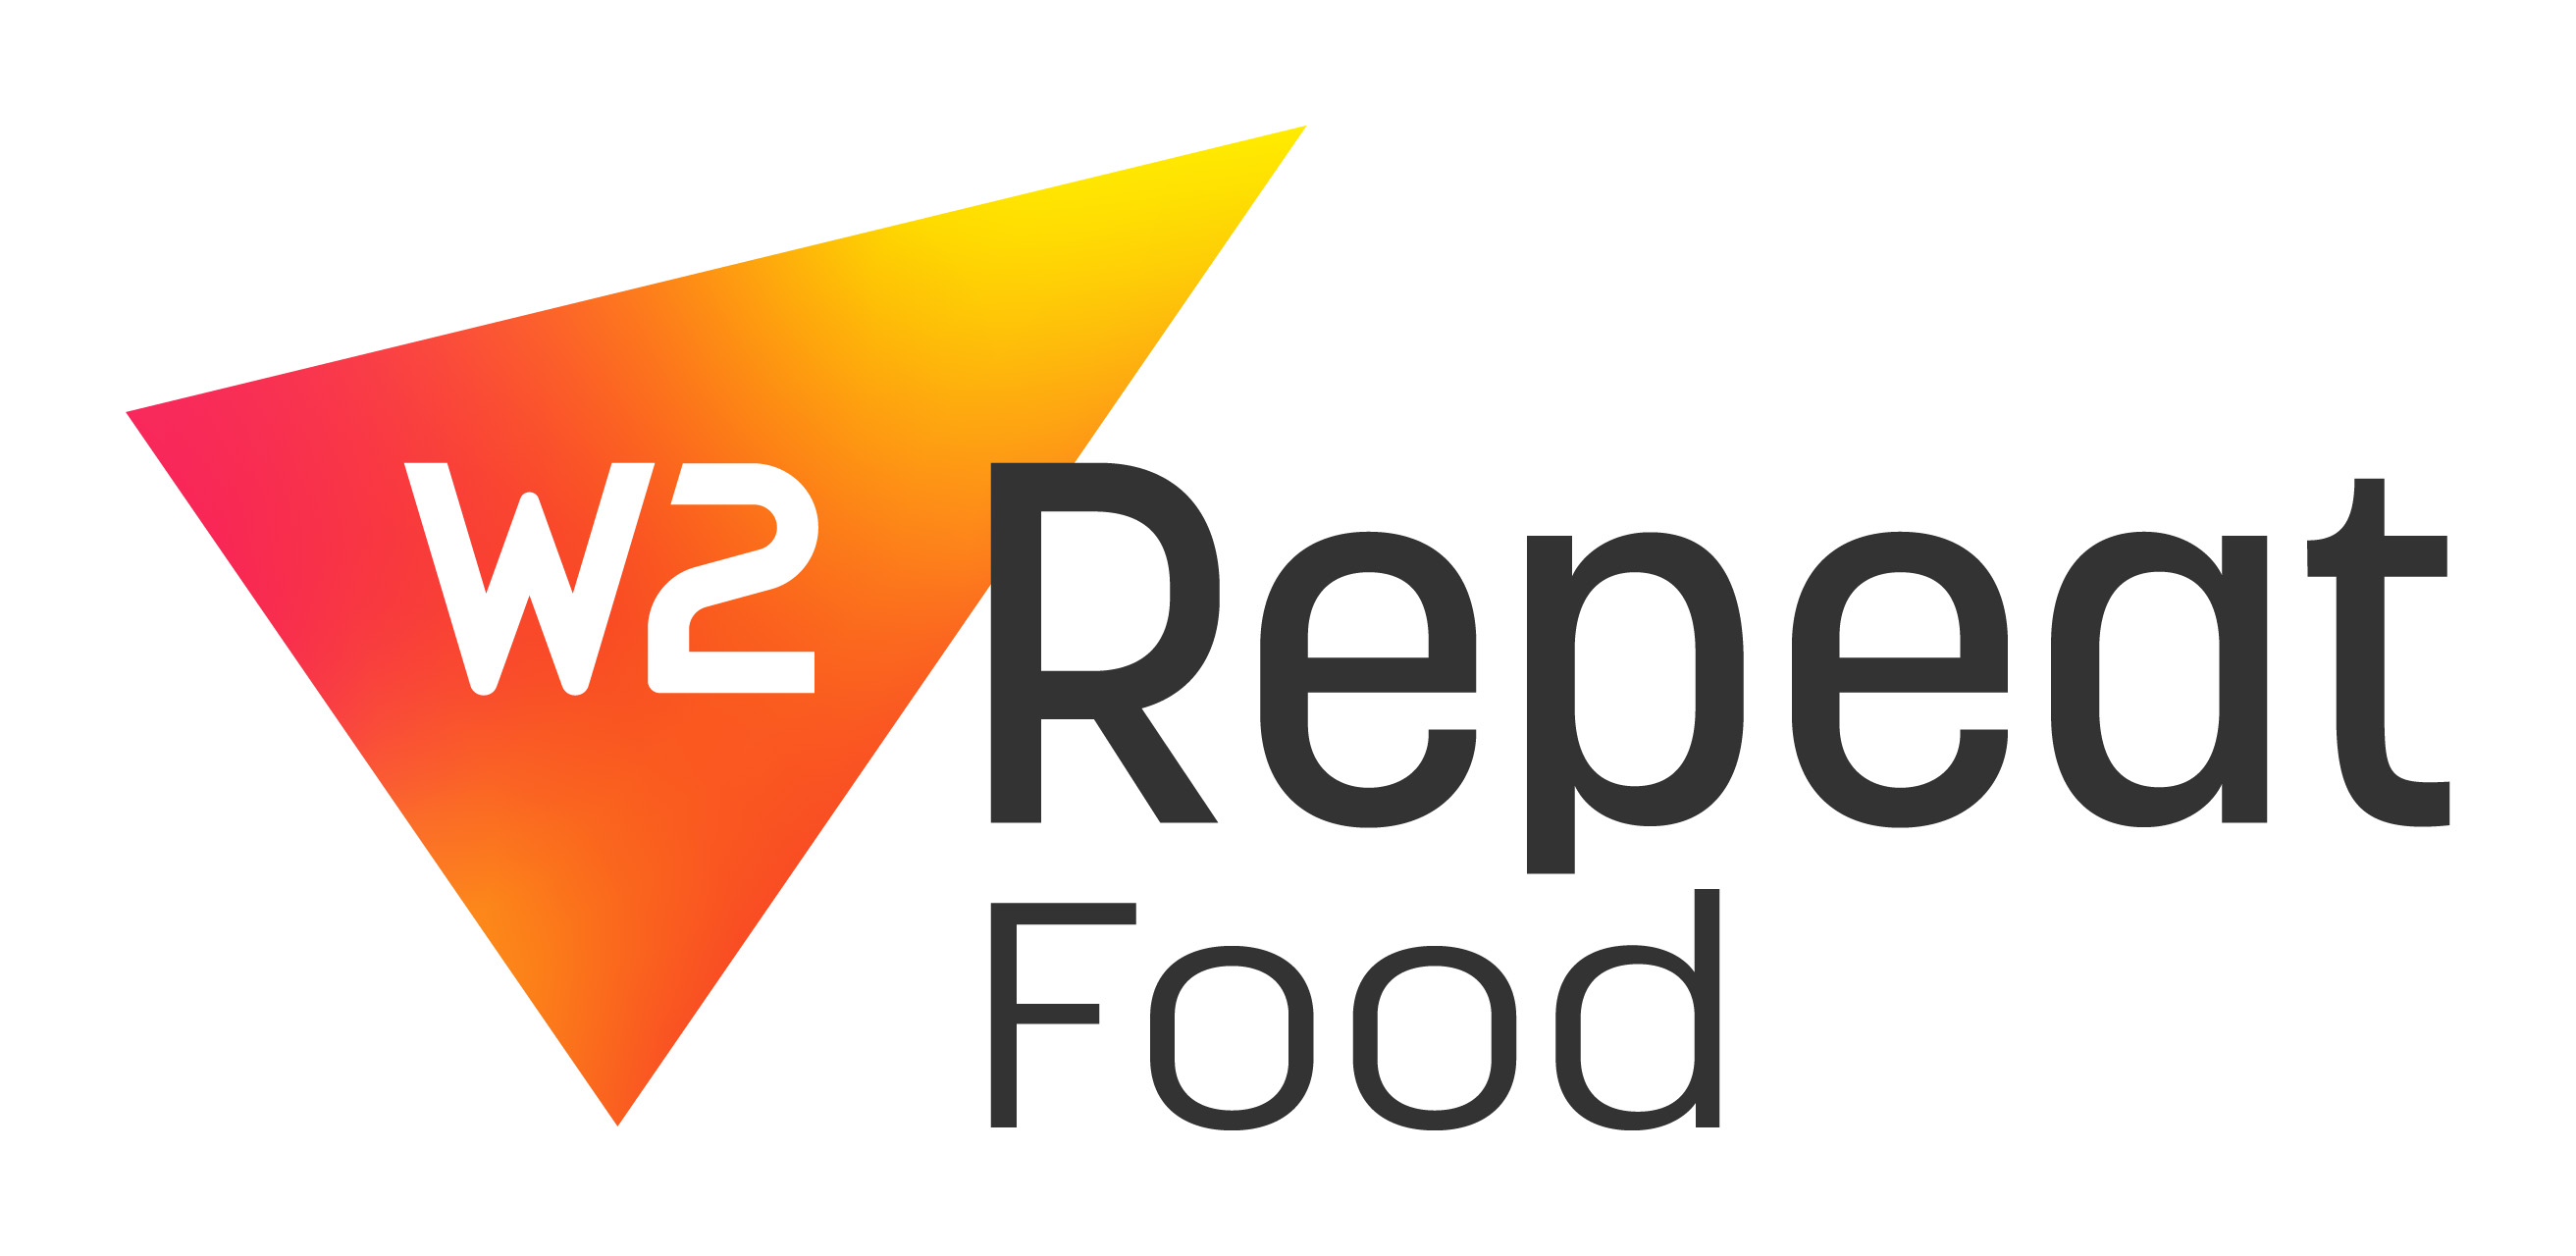 W2 Repeat Food